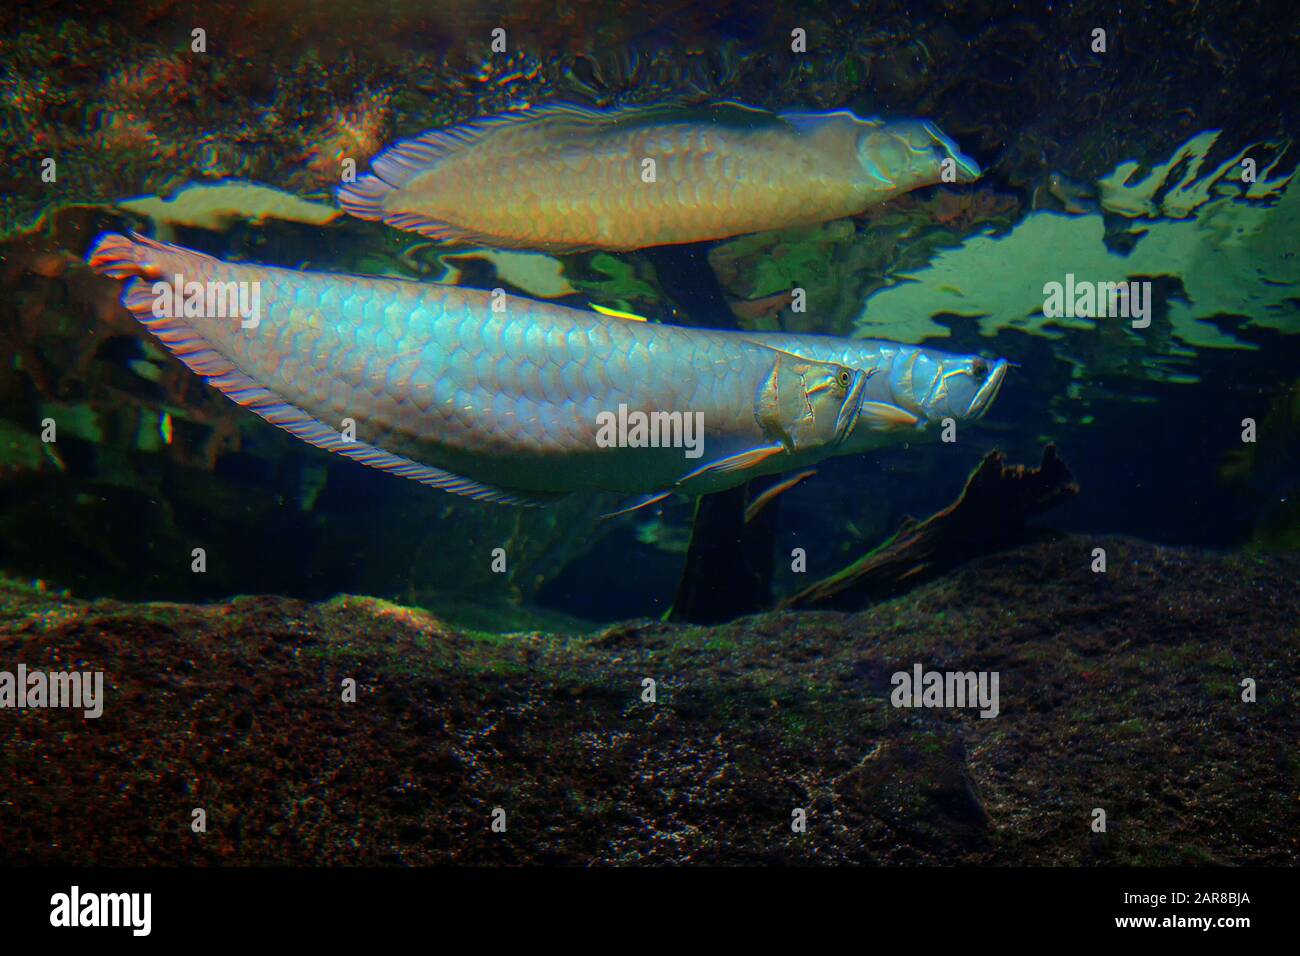 Silver Arowana freshwater bony fish Stock Photo - Alamy